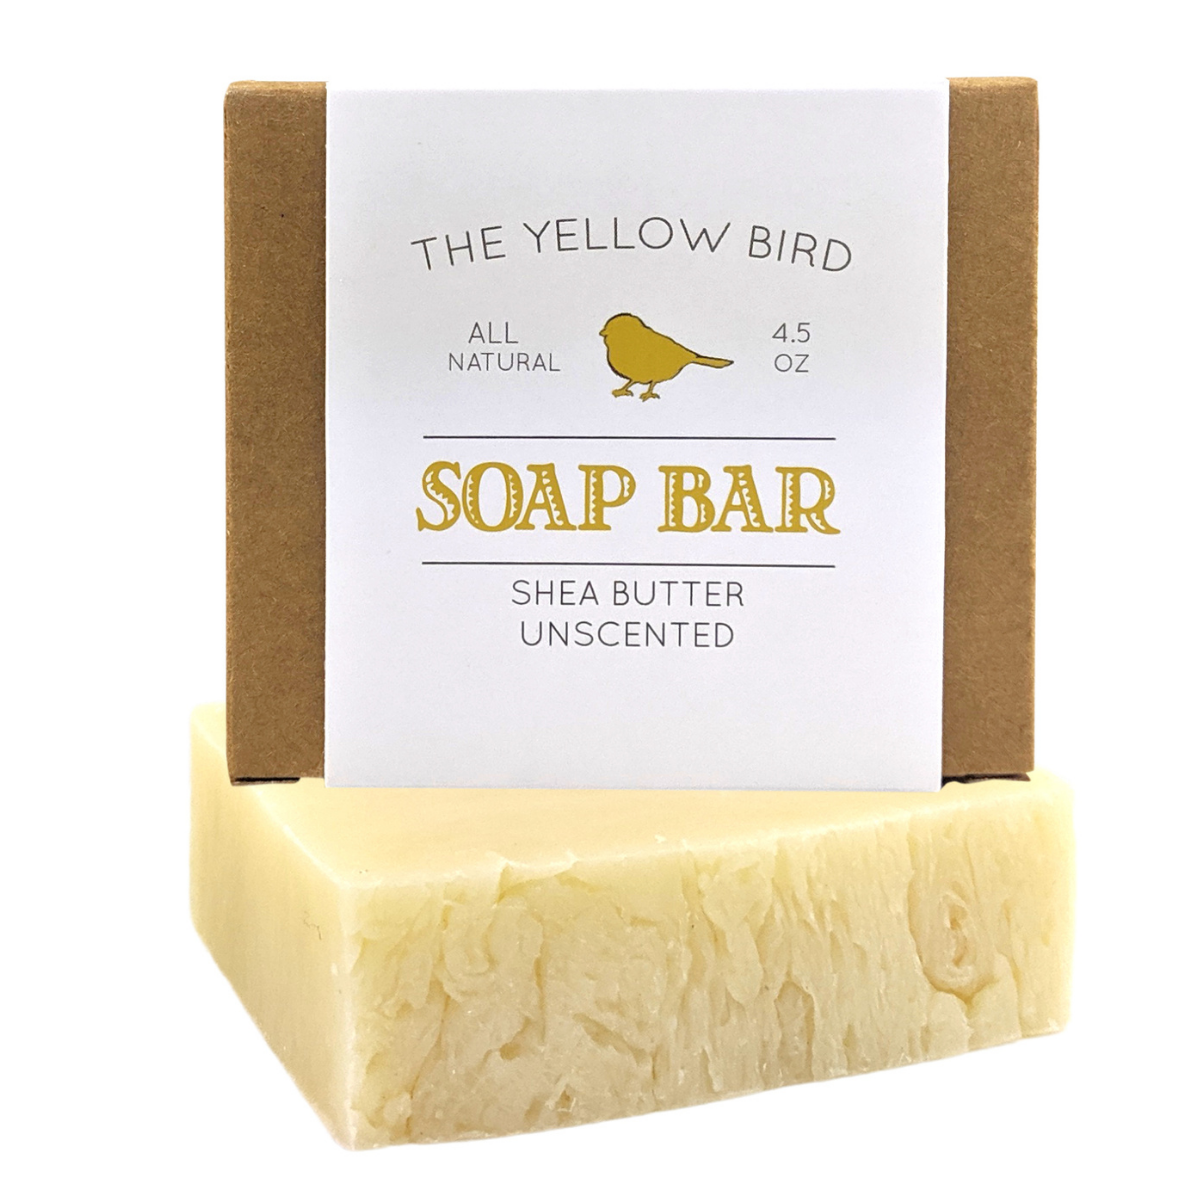 Unscented Shea Butter Soap Bar